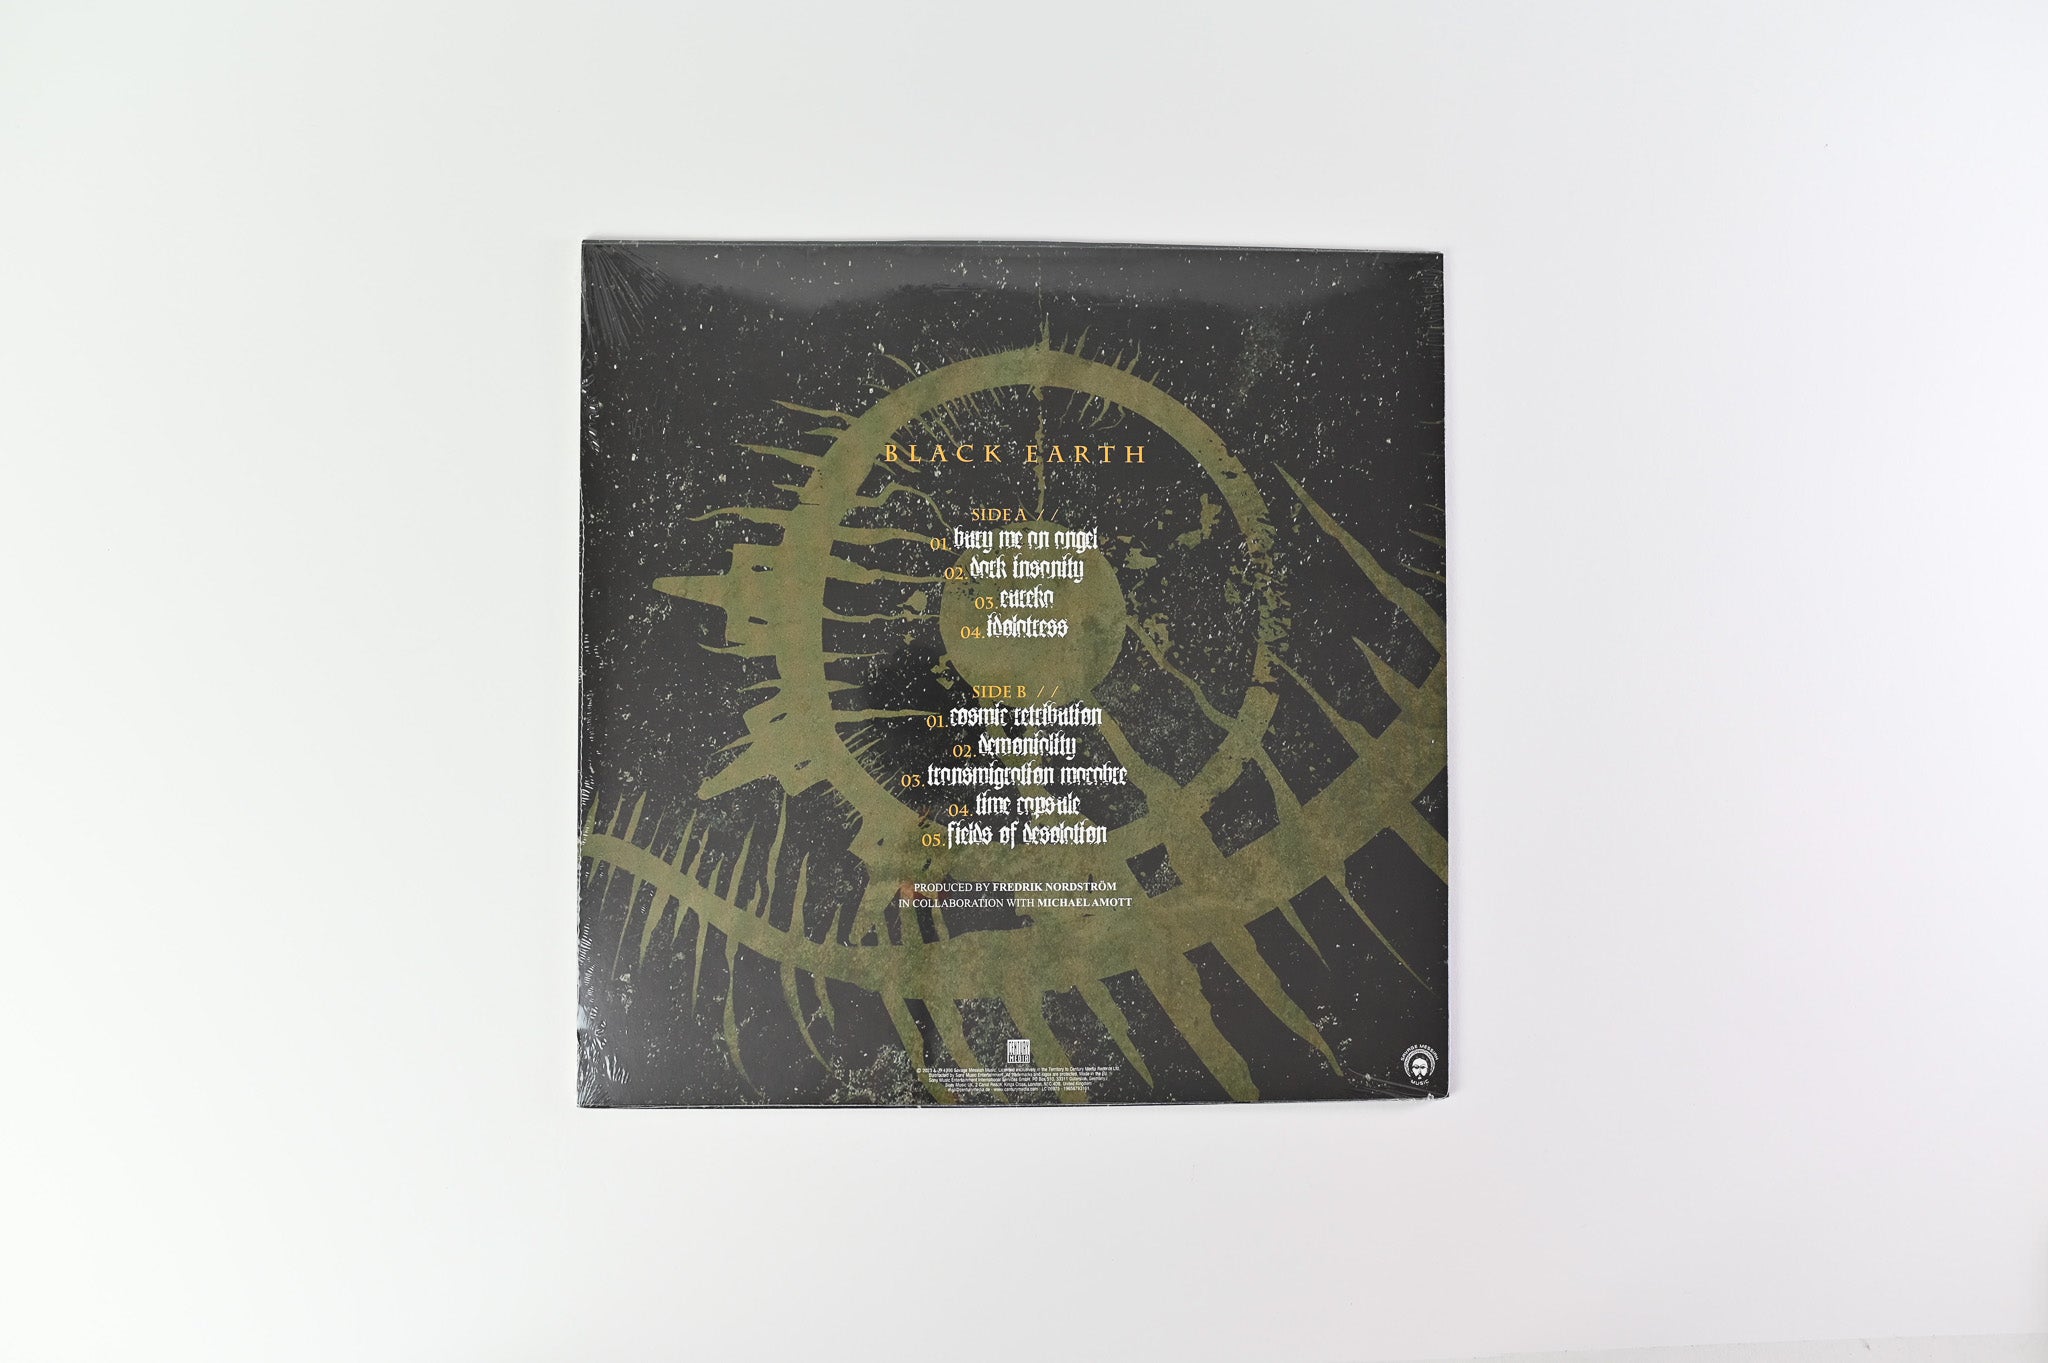 Arch Enemy - Black Earth on Century Media - Gold Vinyl Sealed